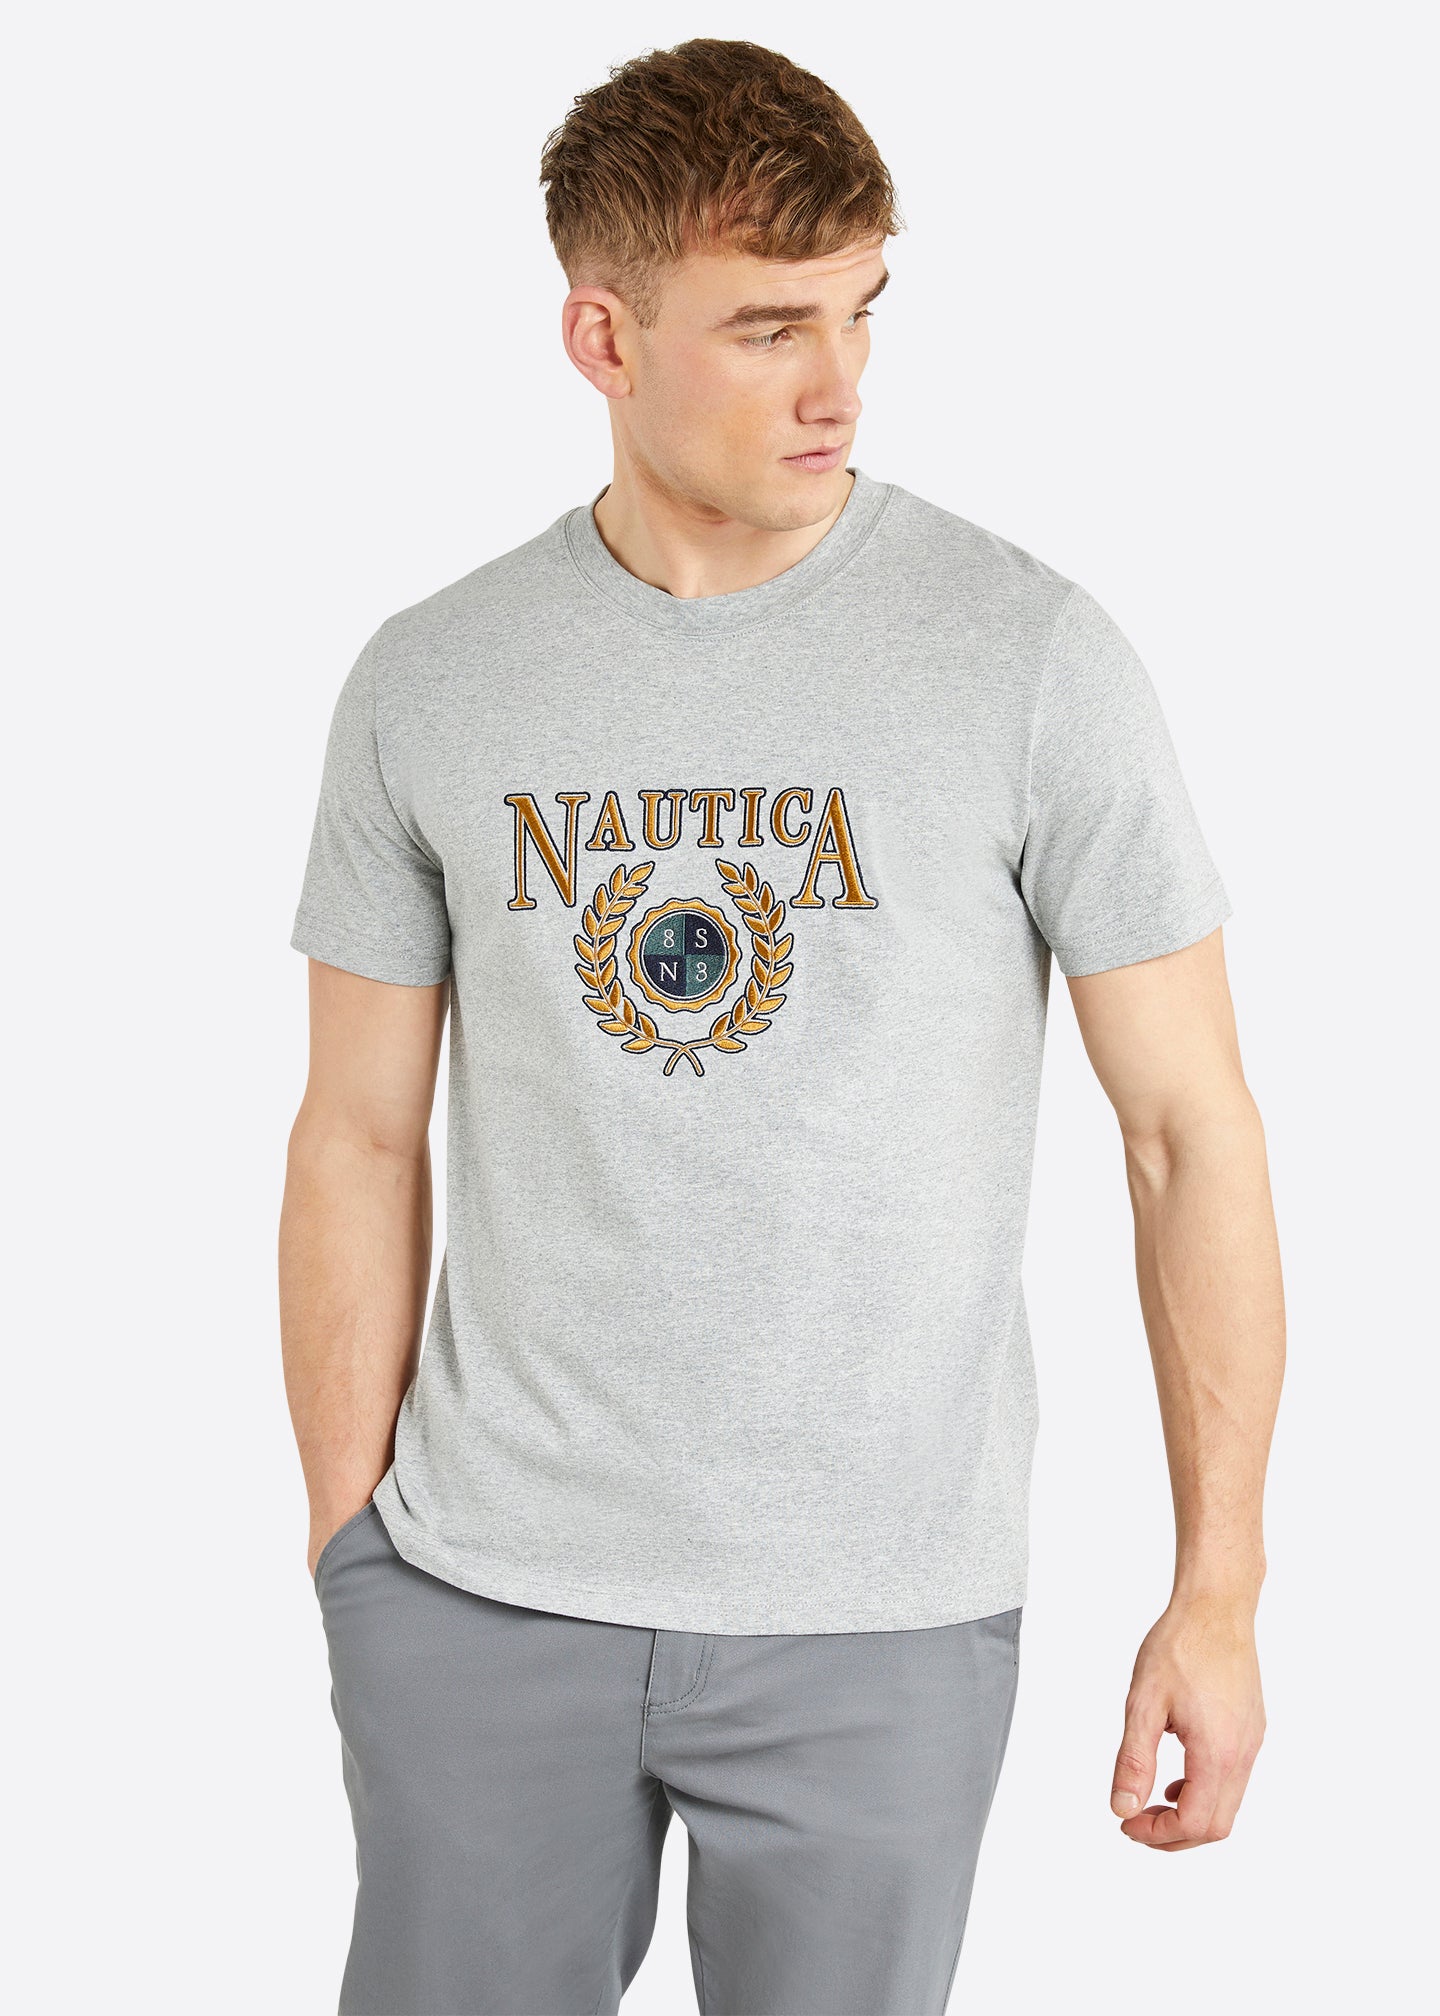 Nautica Brunswick T-Shirt - Grey Marl - Front